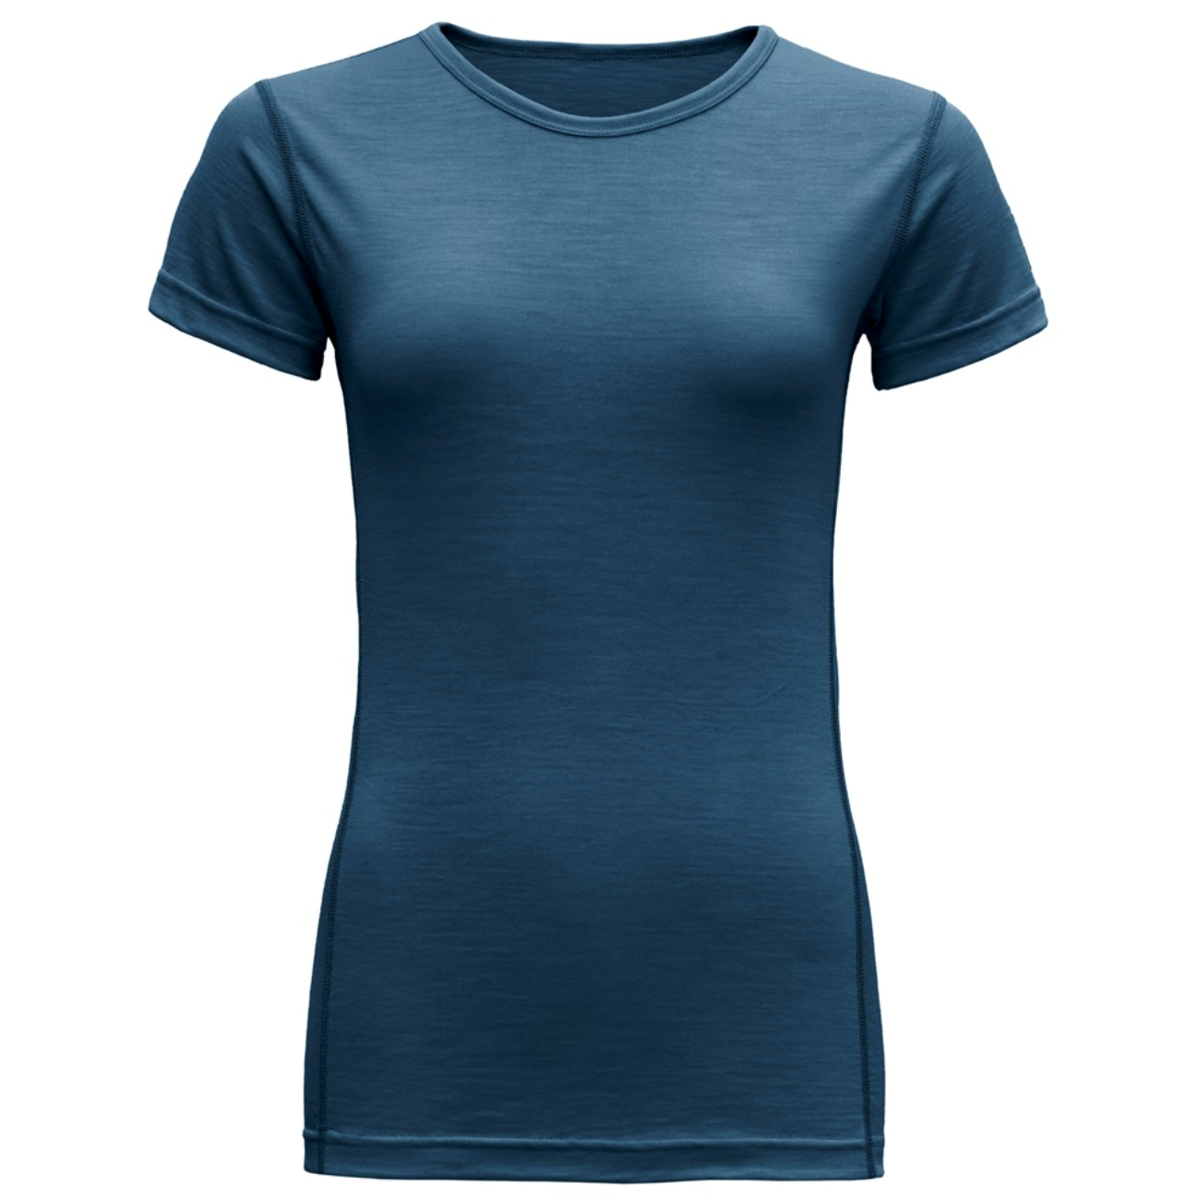 Breeze woman t-shirt